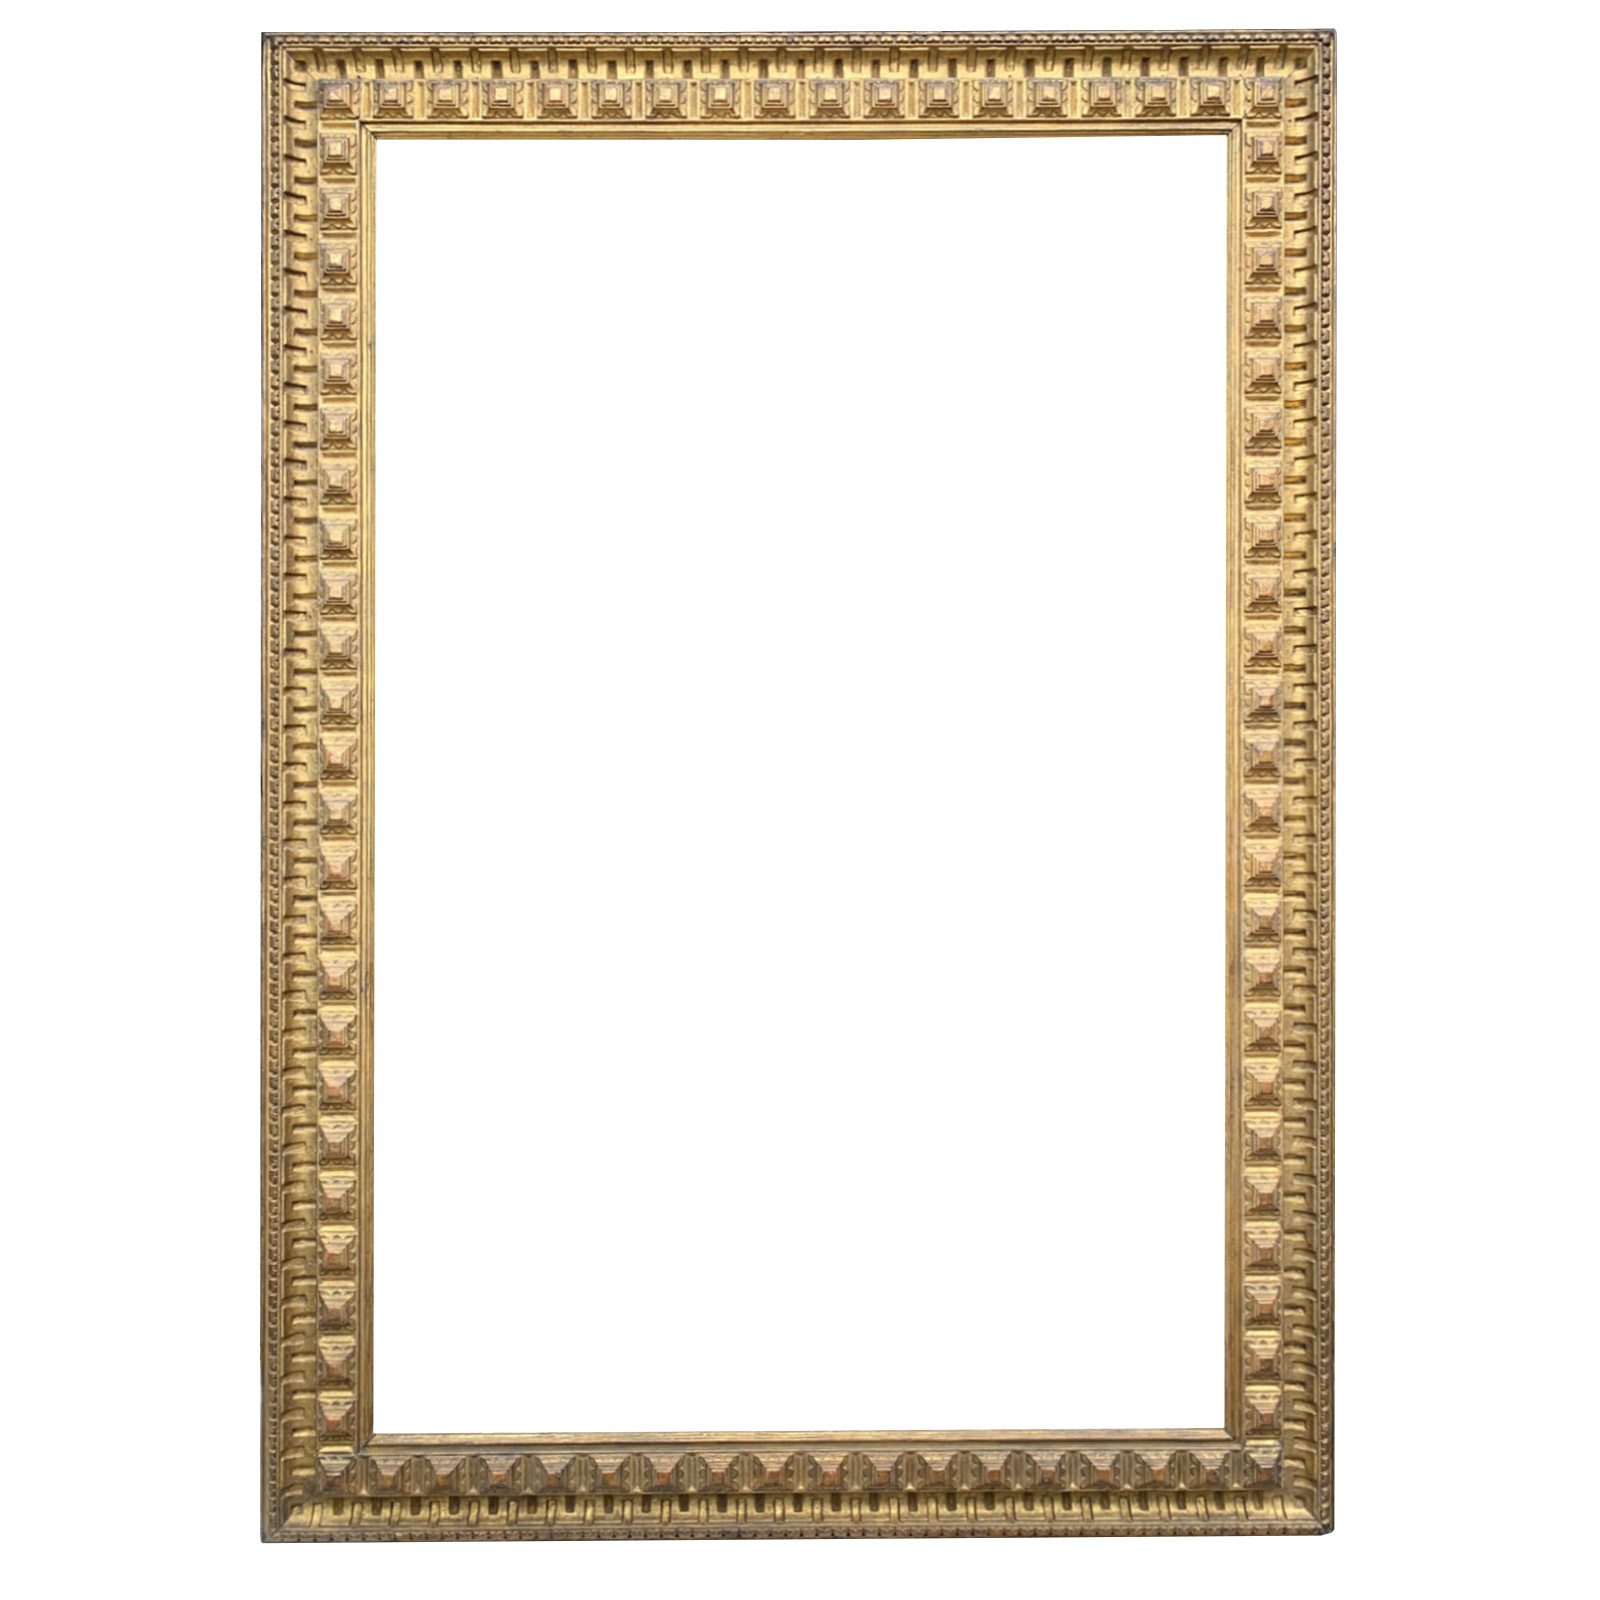 Spanish 17th century reproduction frame